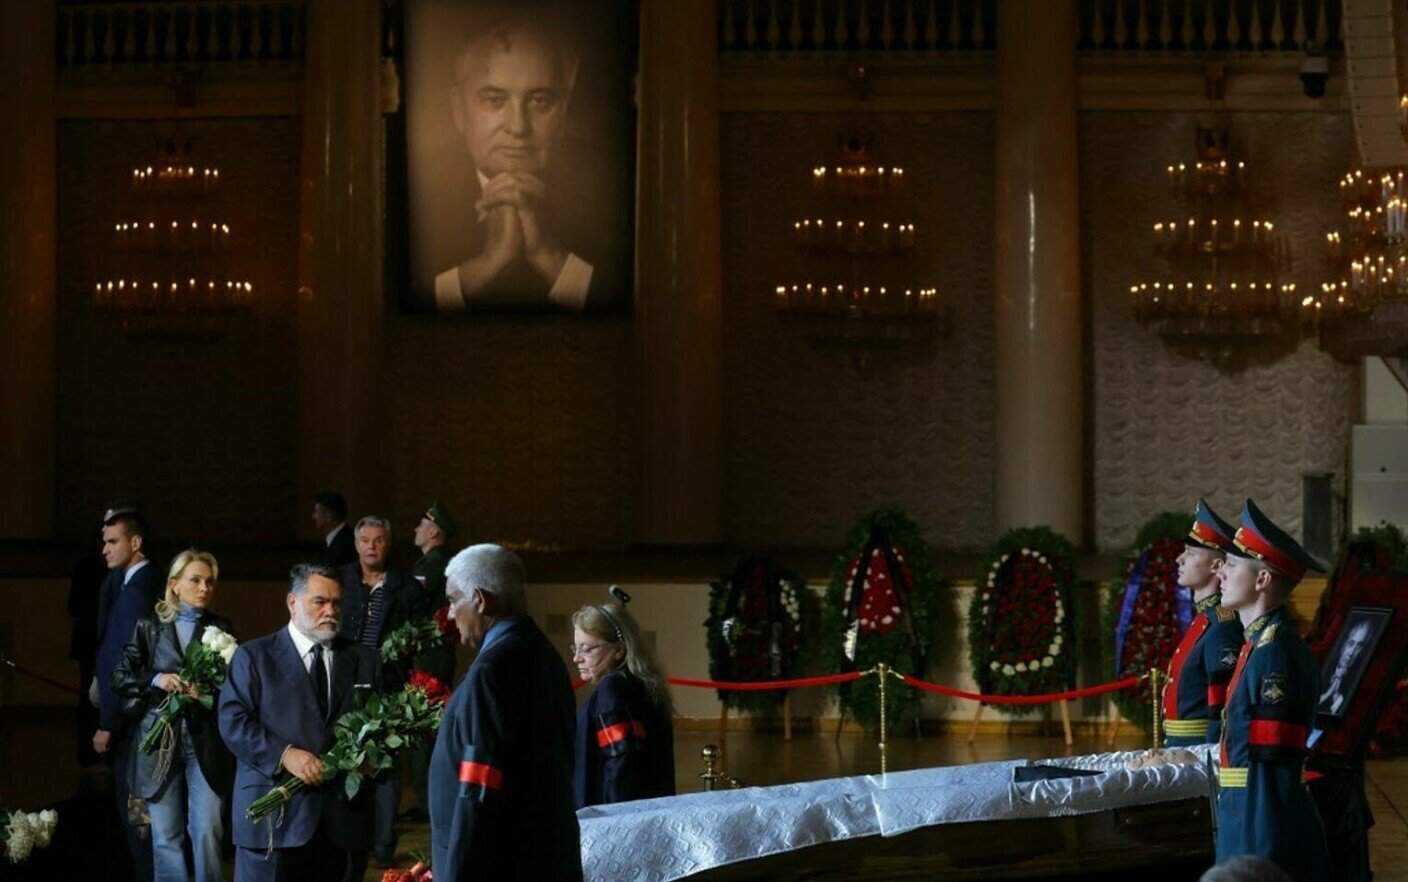 mihail gorbaciov a fost înmormântat la moscova. ultimul lider al